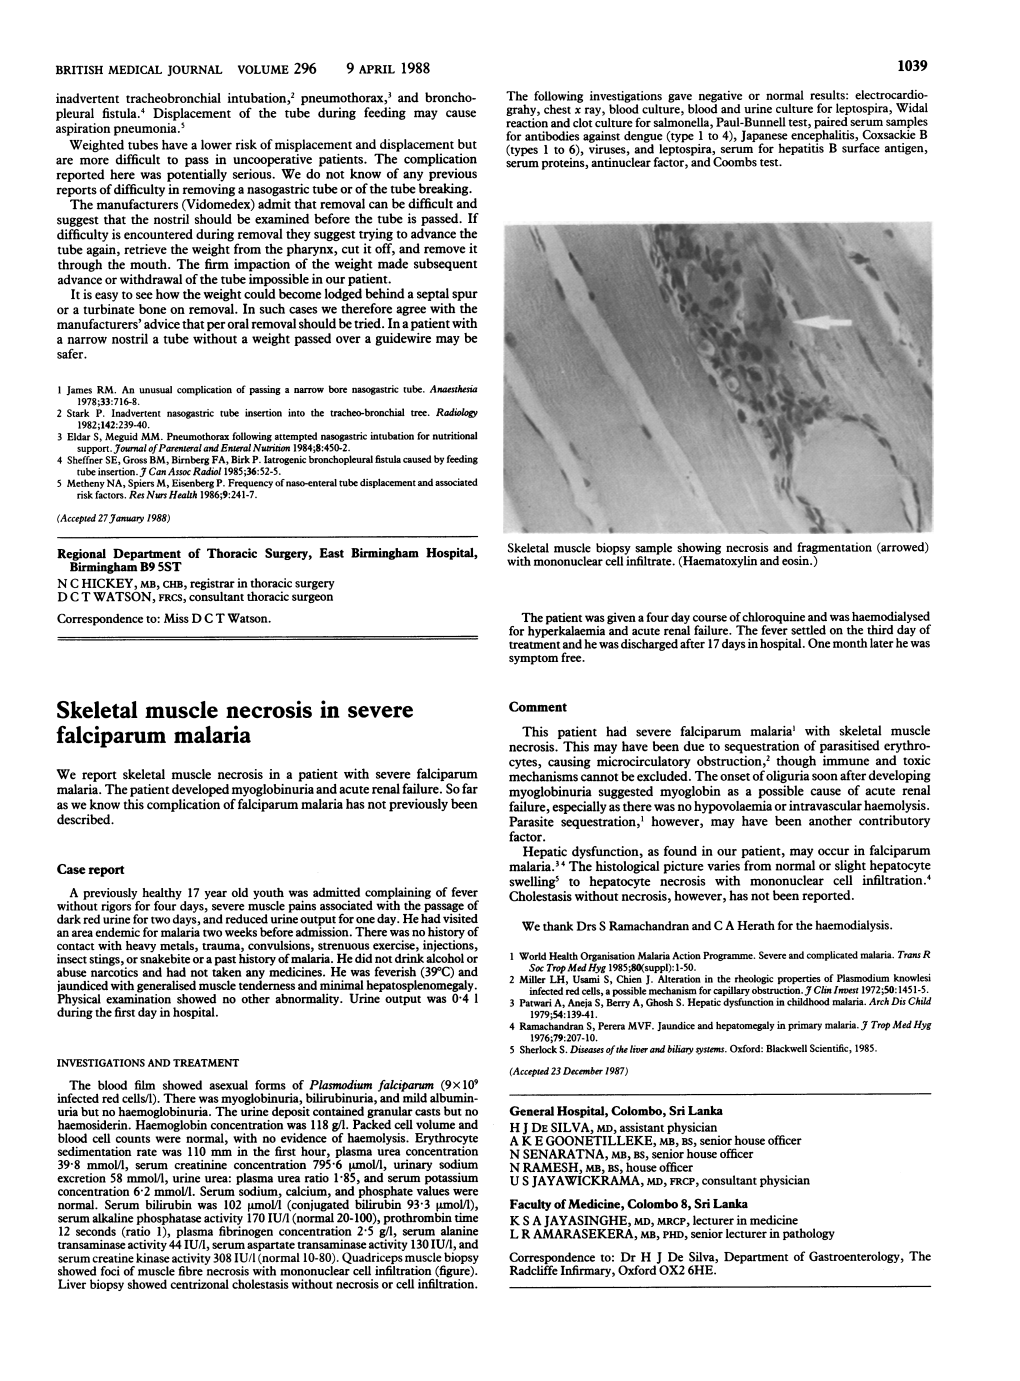 Skeletal Muscle Necrosis in Severe Falciparum Malaria